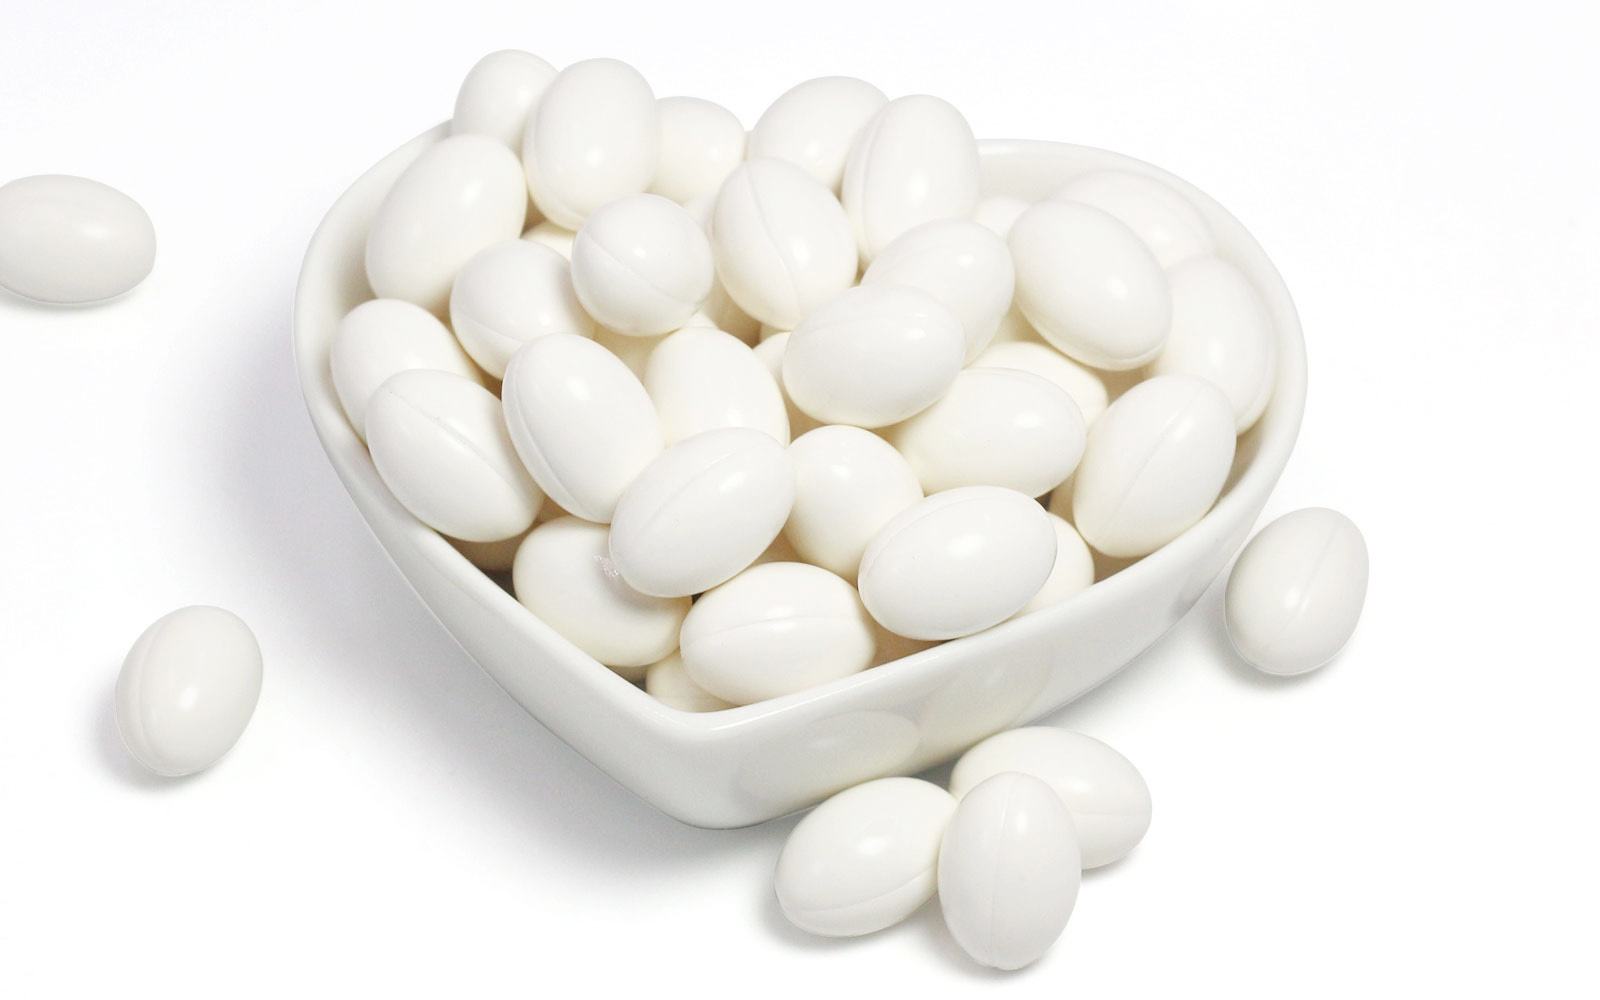 Adults healthcare supplements best calcium & vitamin d3 soft capsules for bones